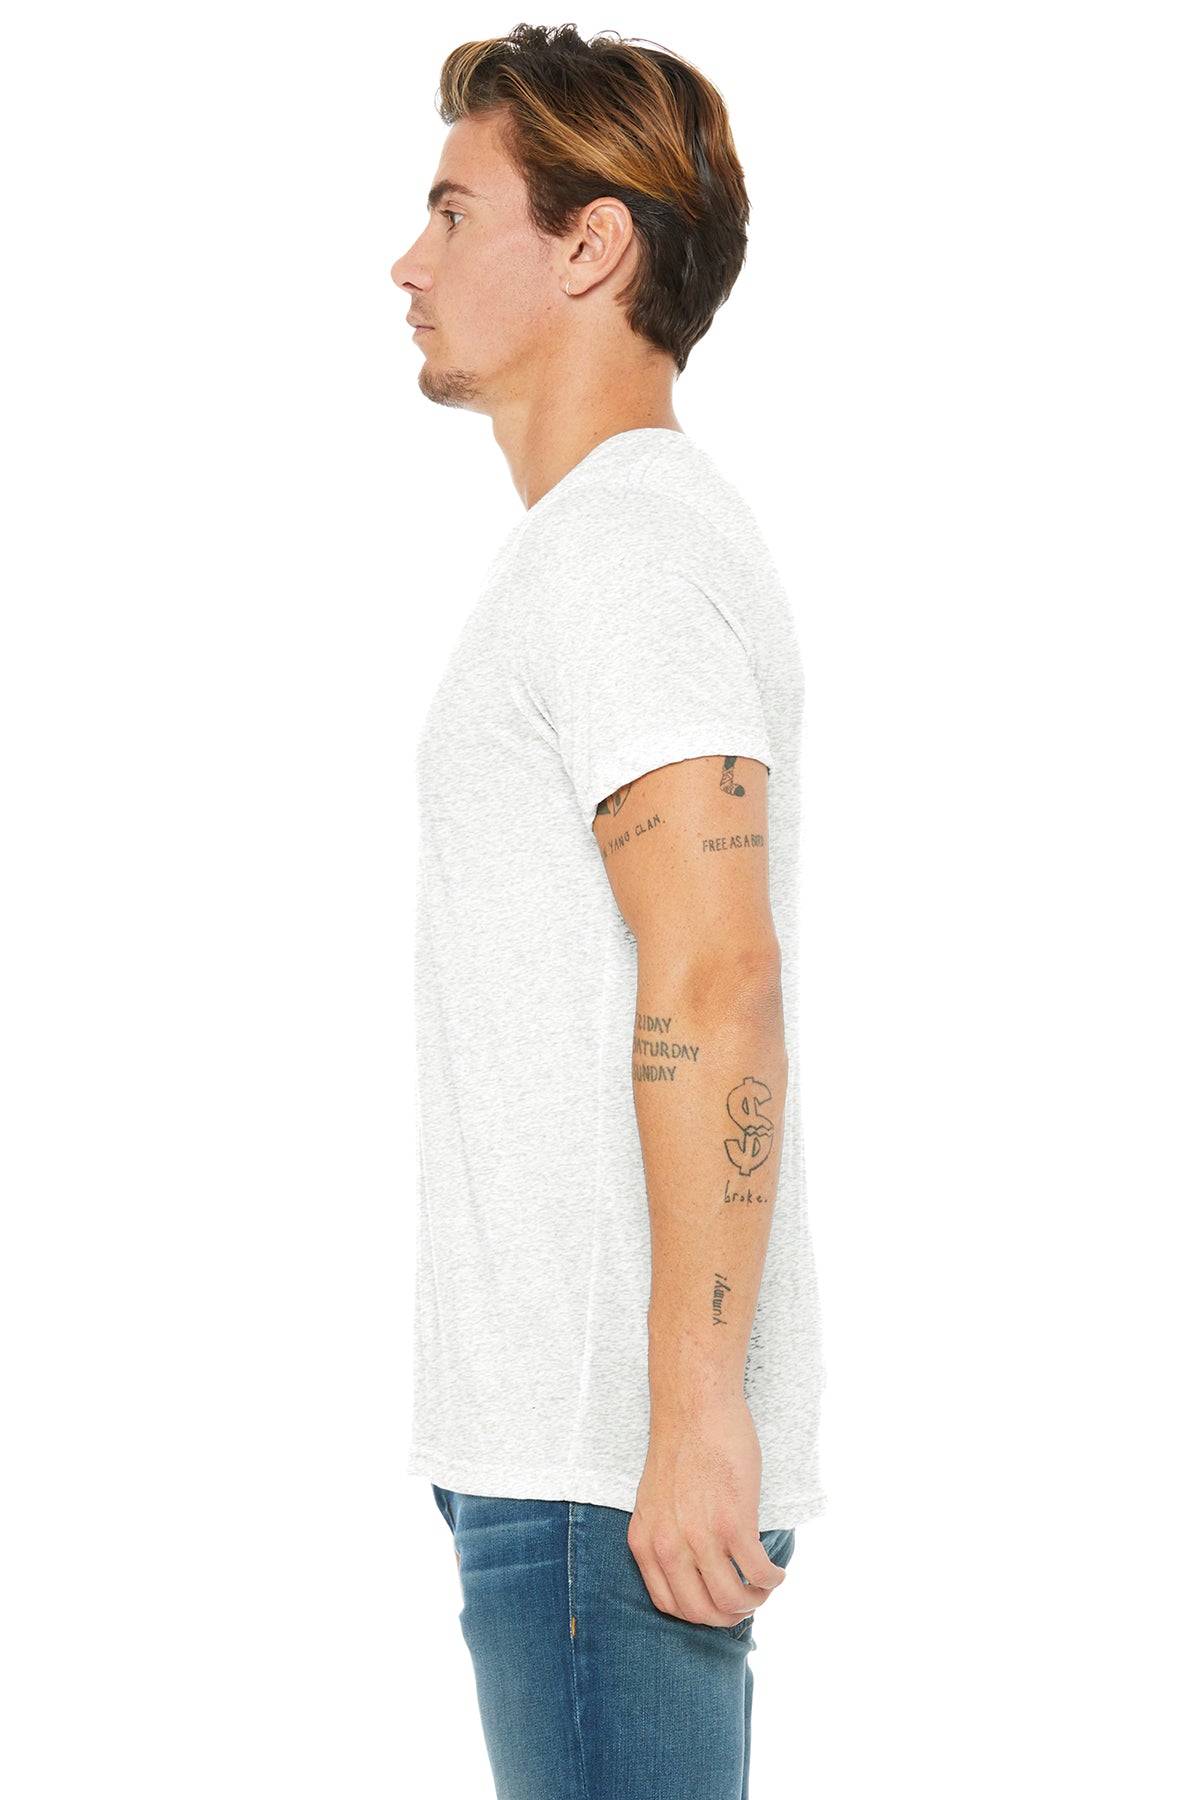 bella + canvas unisex triblend short sleeve v-neck t-shirt 3415c wht flck triblnd